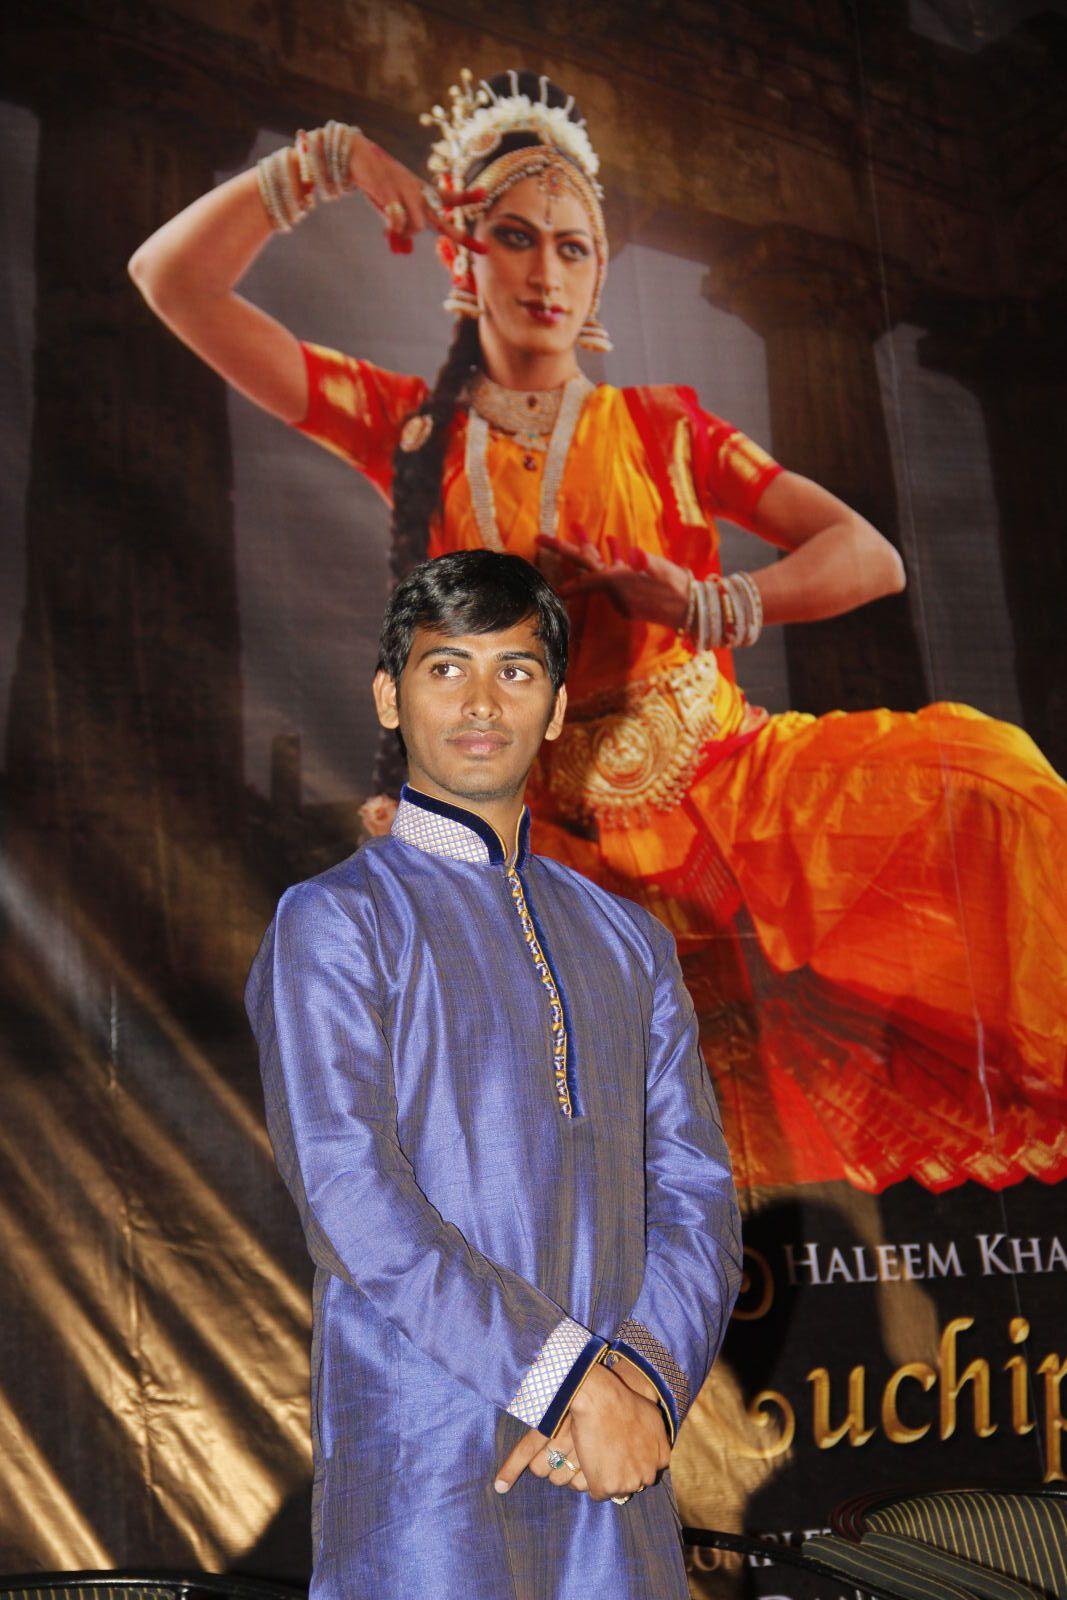 Haleem Khan Kuchipudi Dance DVD Launch Photos